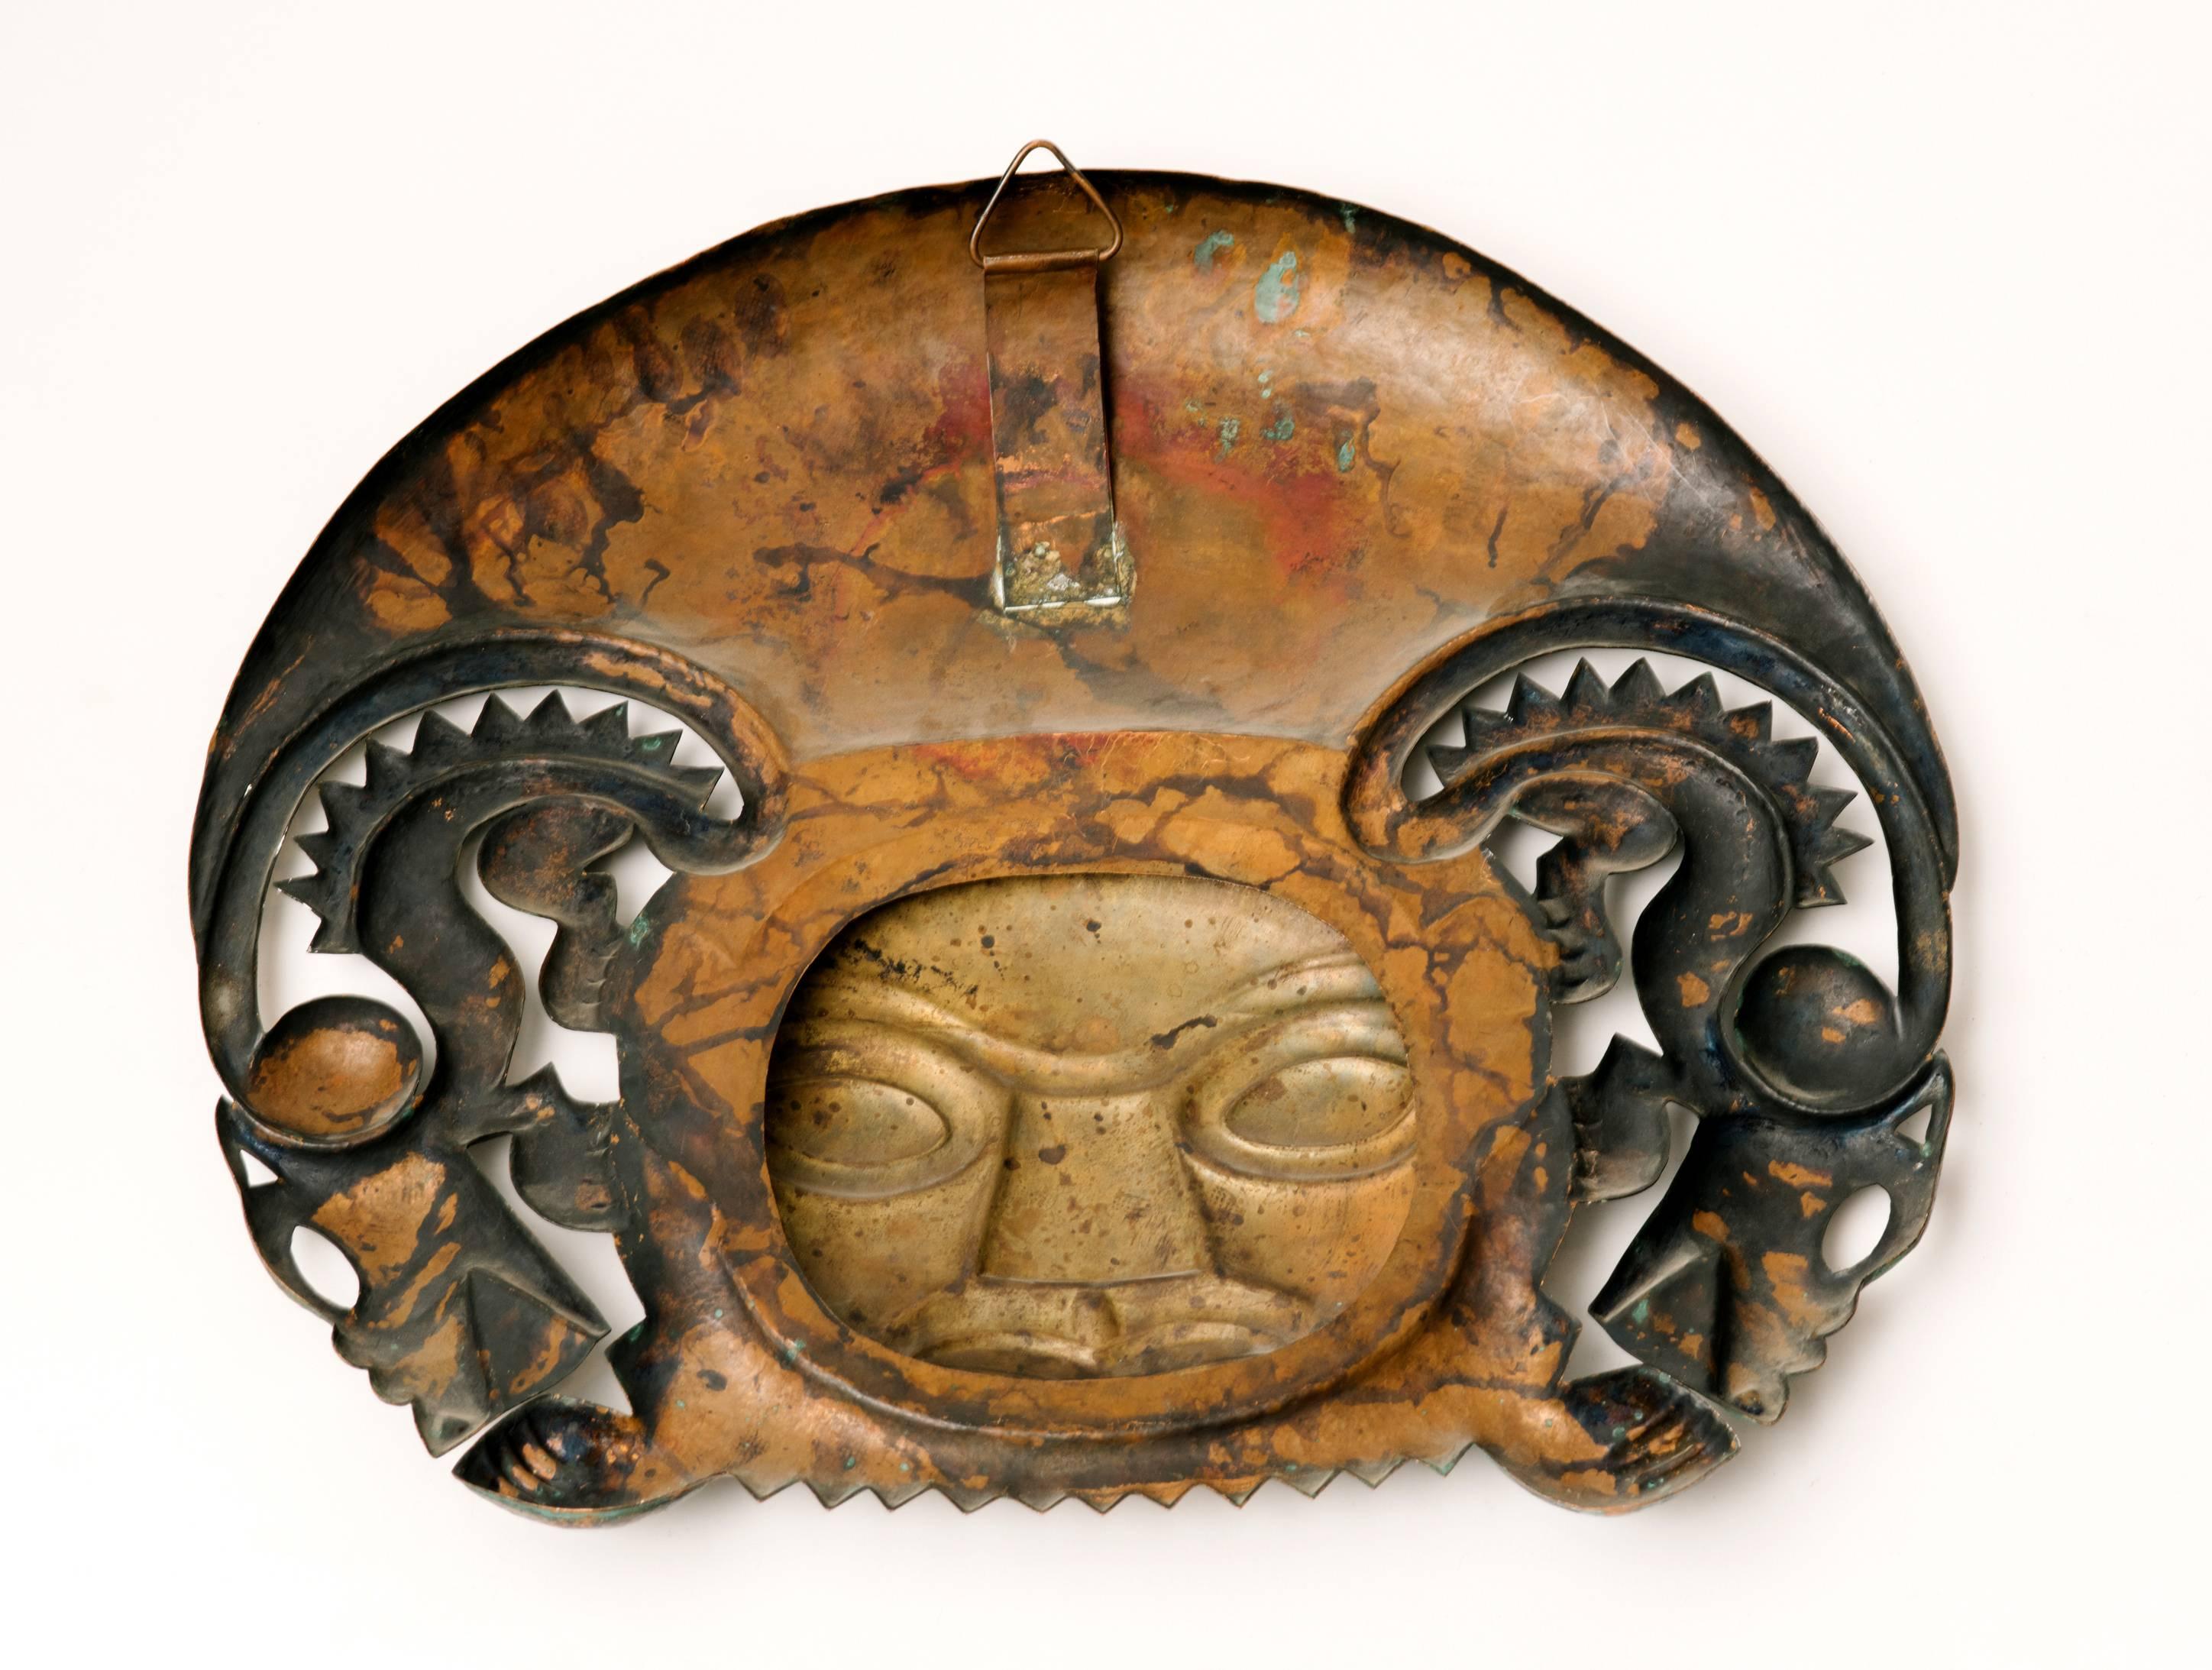 Pair of Peruvian Mask Sculptures Attributed to Graziella Laffi  1